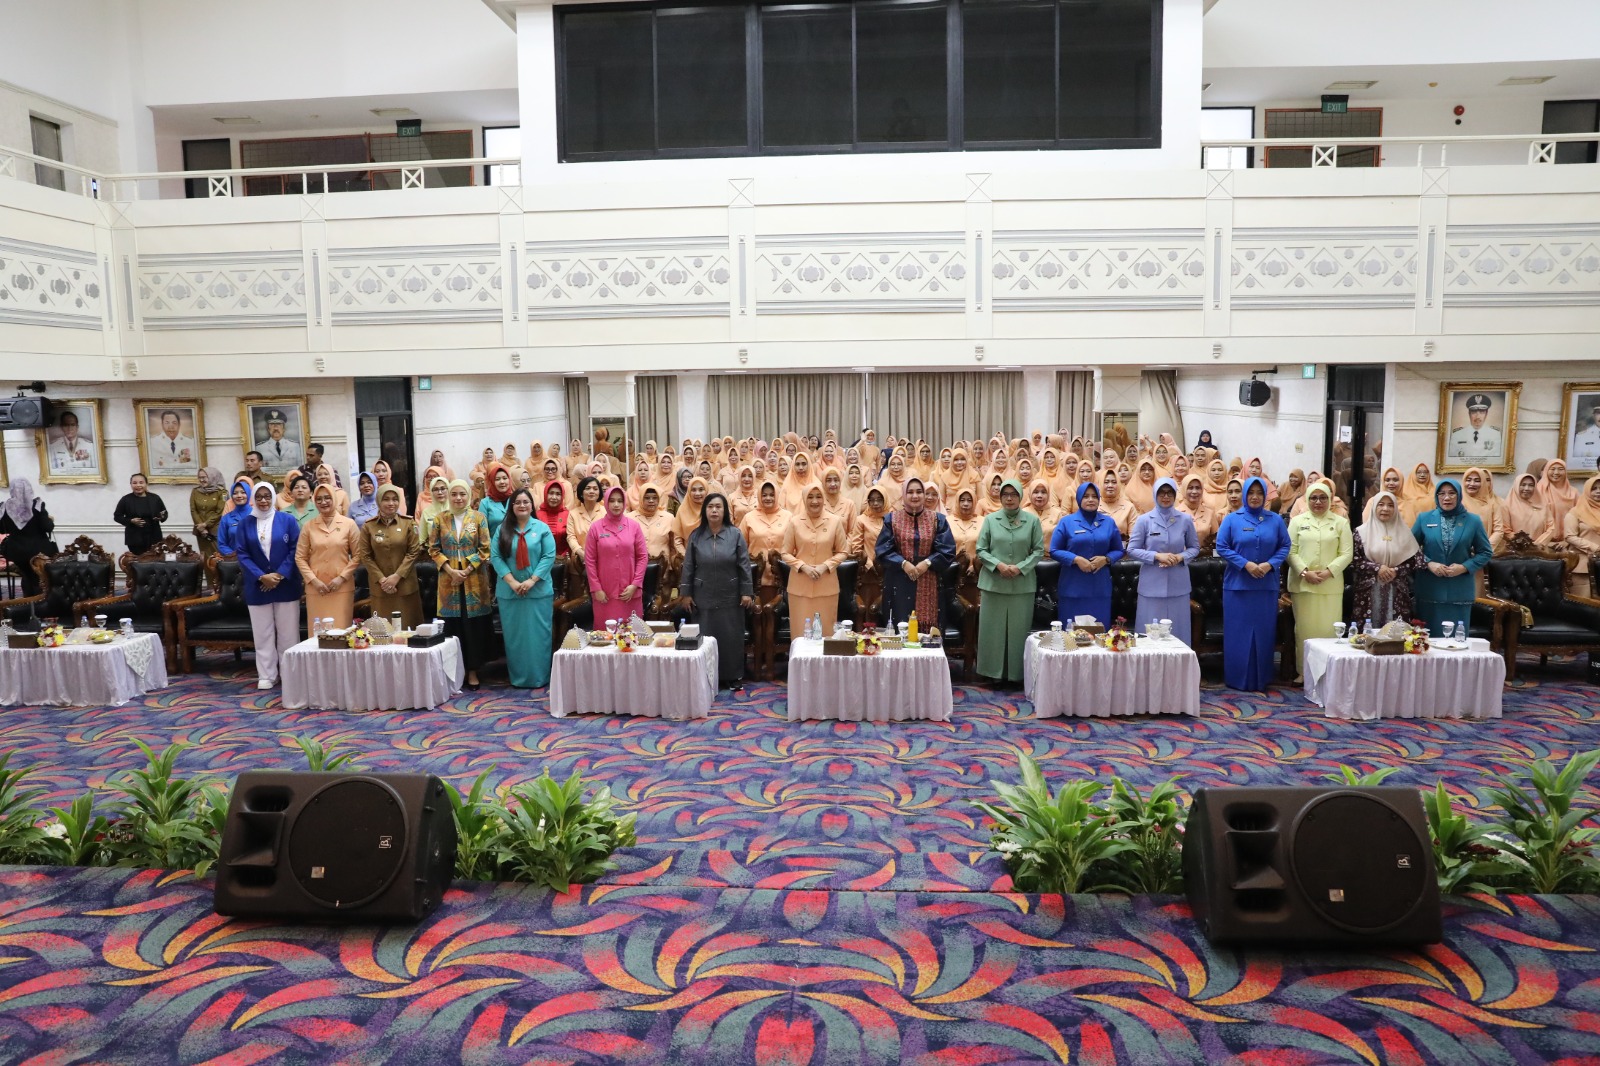 HUT Dharma Wanita Persatuan ke-24, Sekdaprov Fahrizal Apresiasi Dedikasi dan Kerja Keras Mewujudkan Visi dan Misi Rakyat Lampung Berjaya